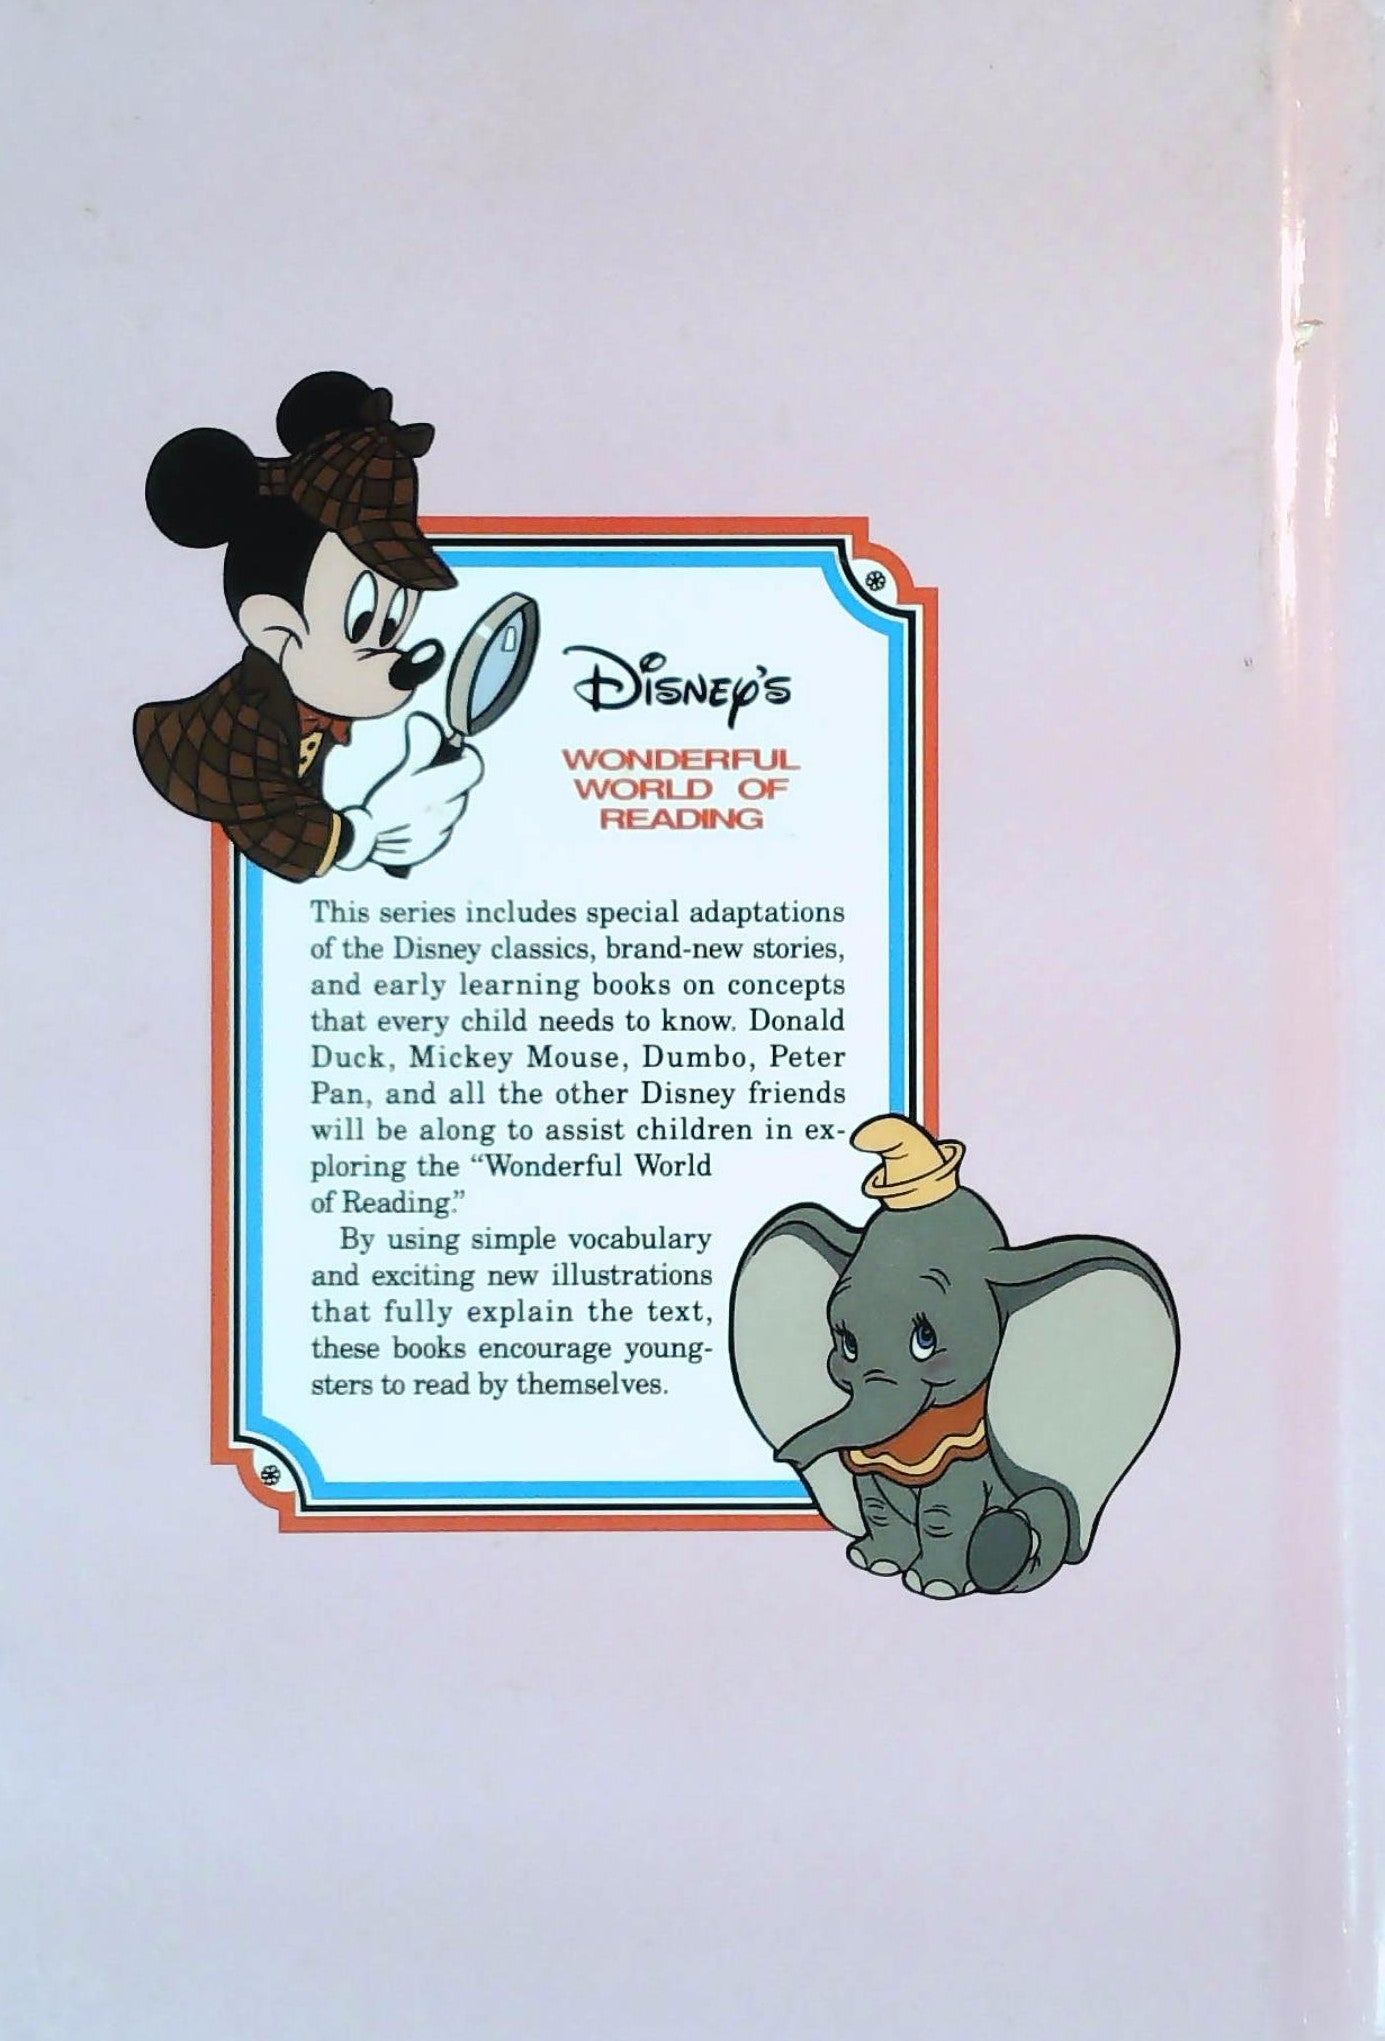 Disney's Wonderful World of Reading : The Prince And The Pauper (Walt Disney)